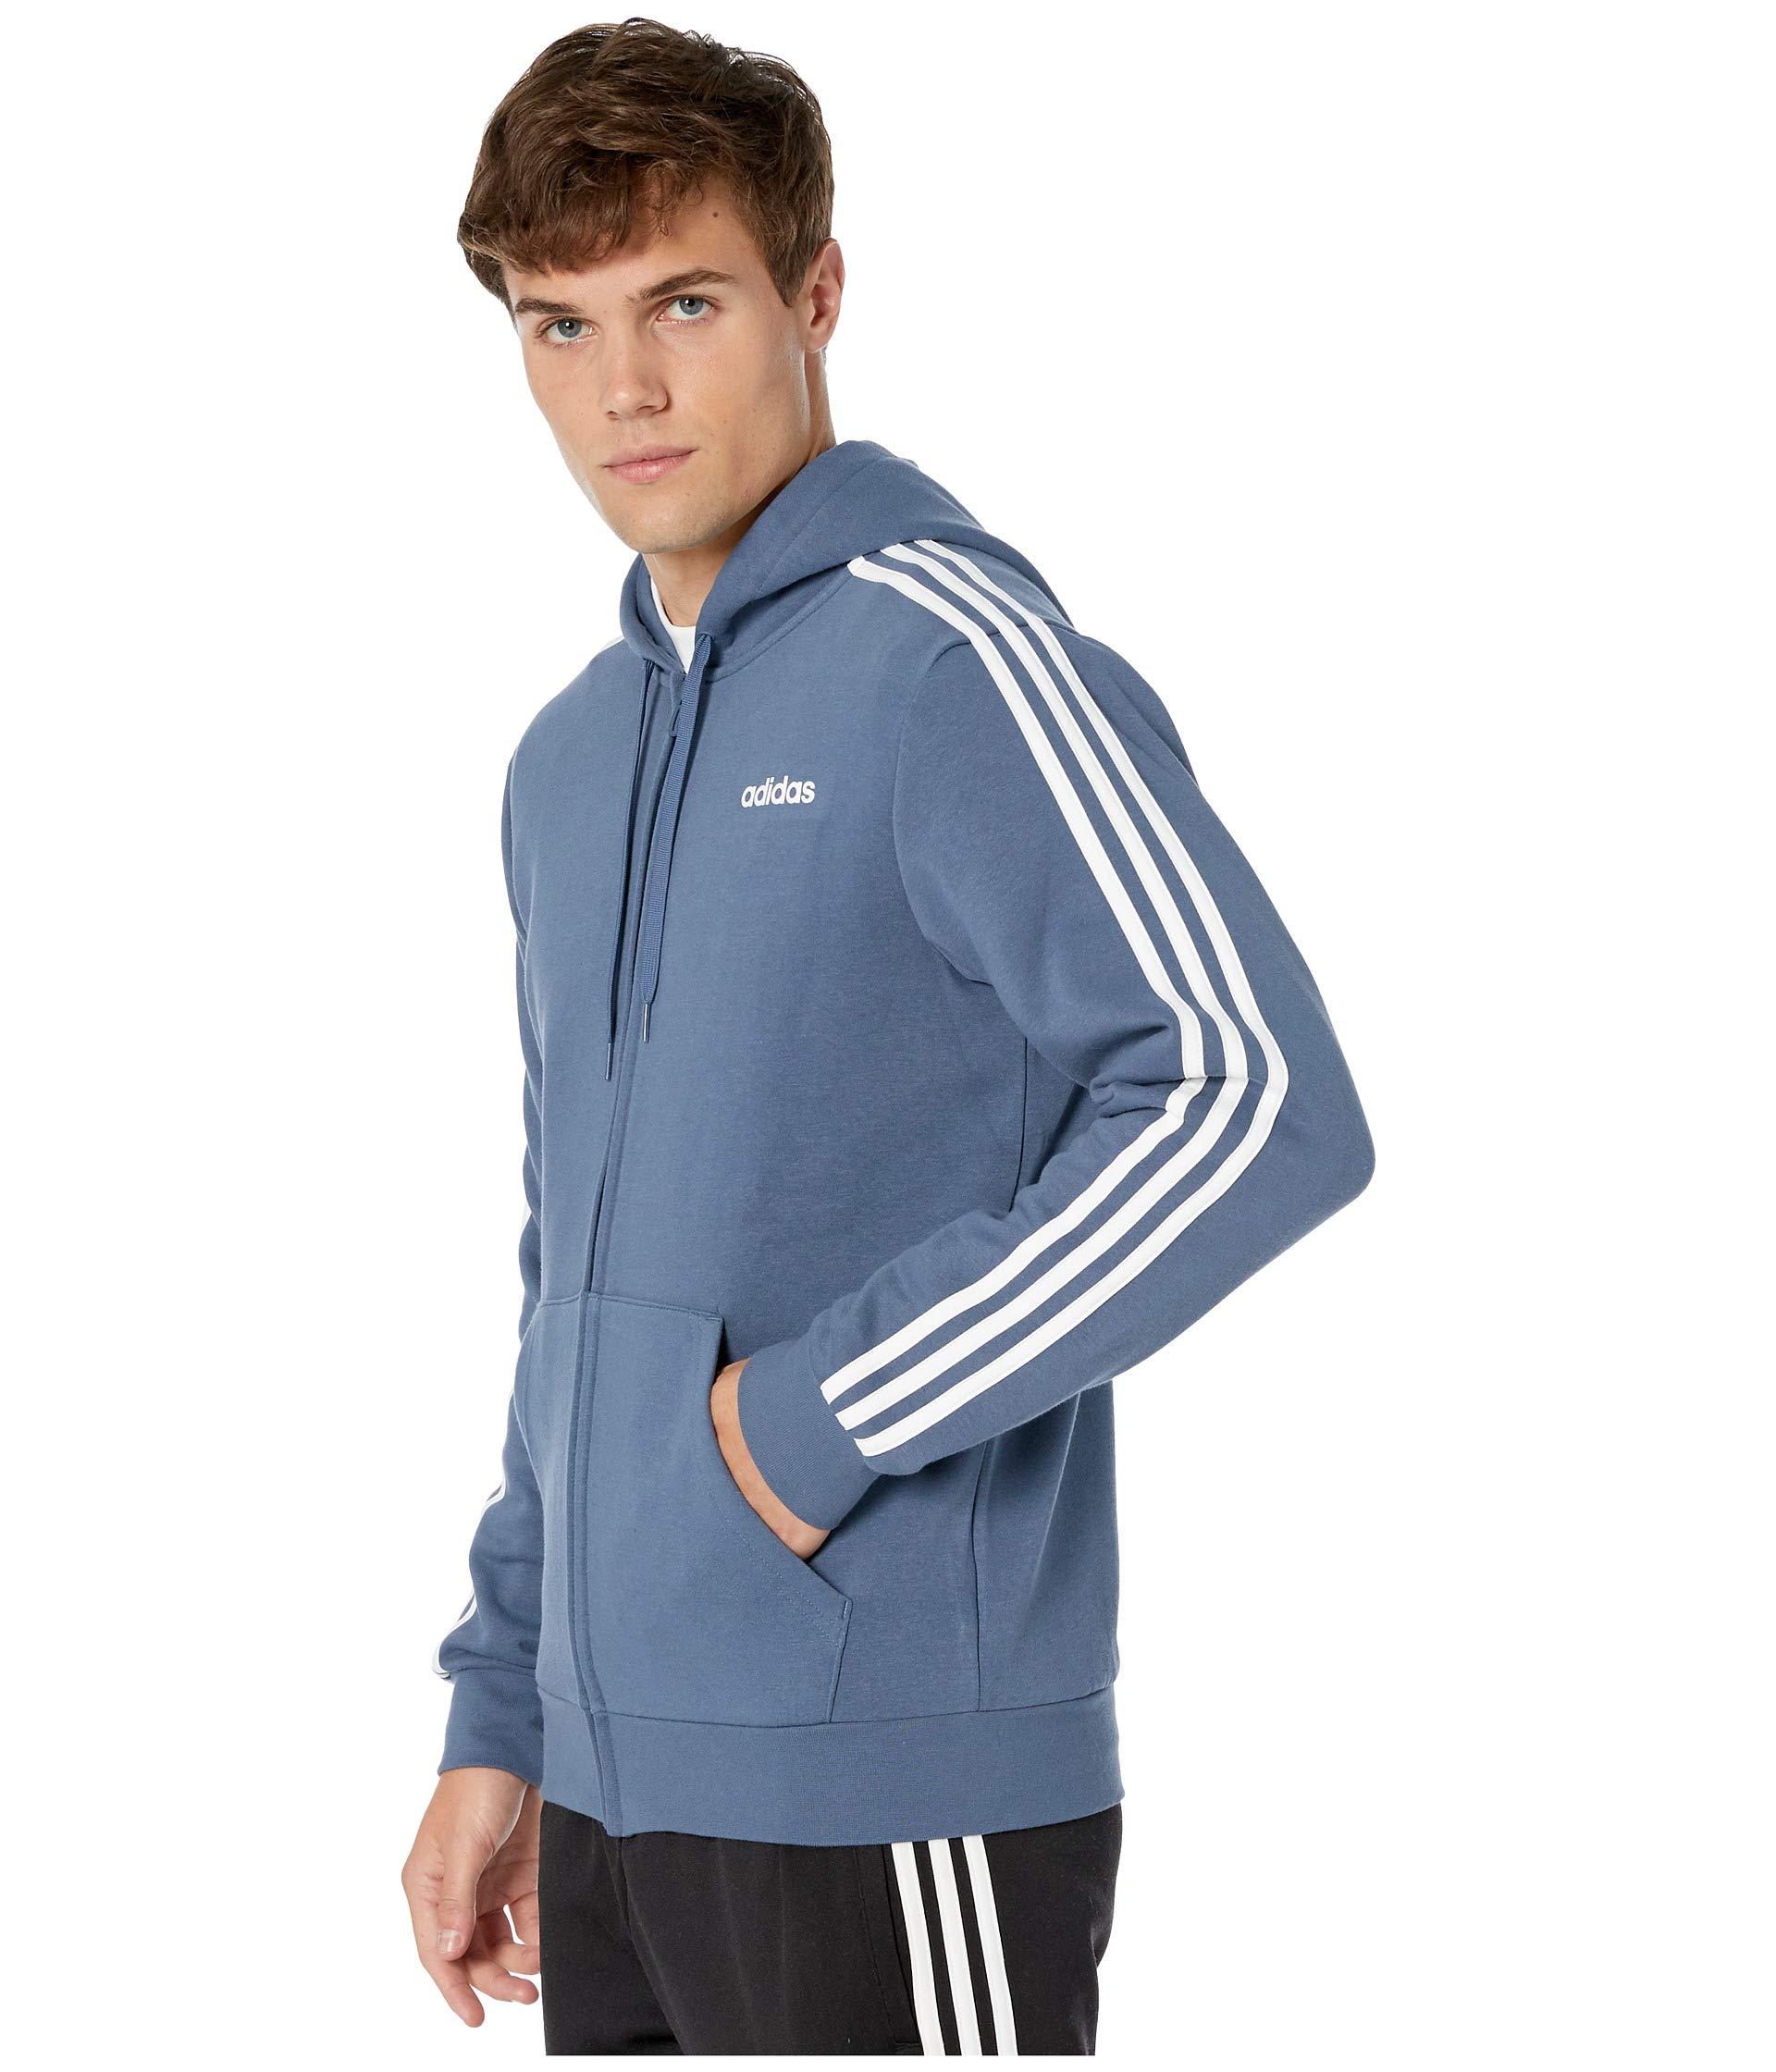 adidas Essentials 3-stripes Fleece Full Zip Hoodie in Blue for Men - Lyst